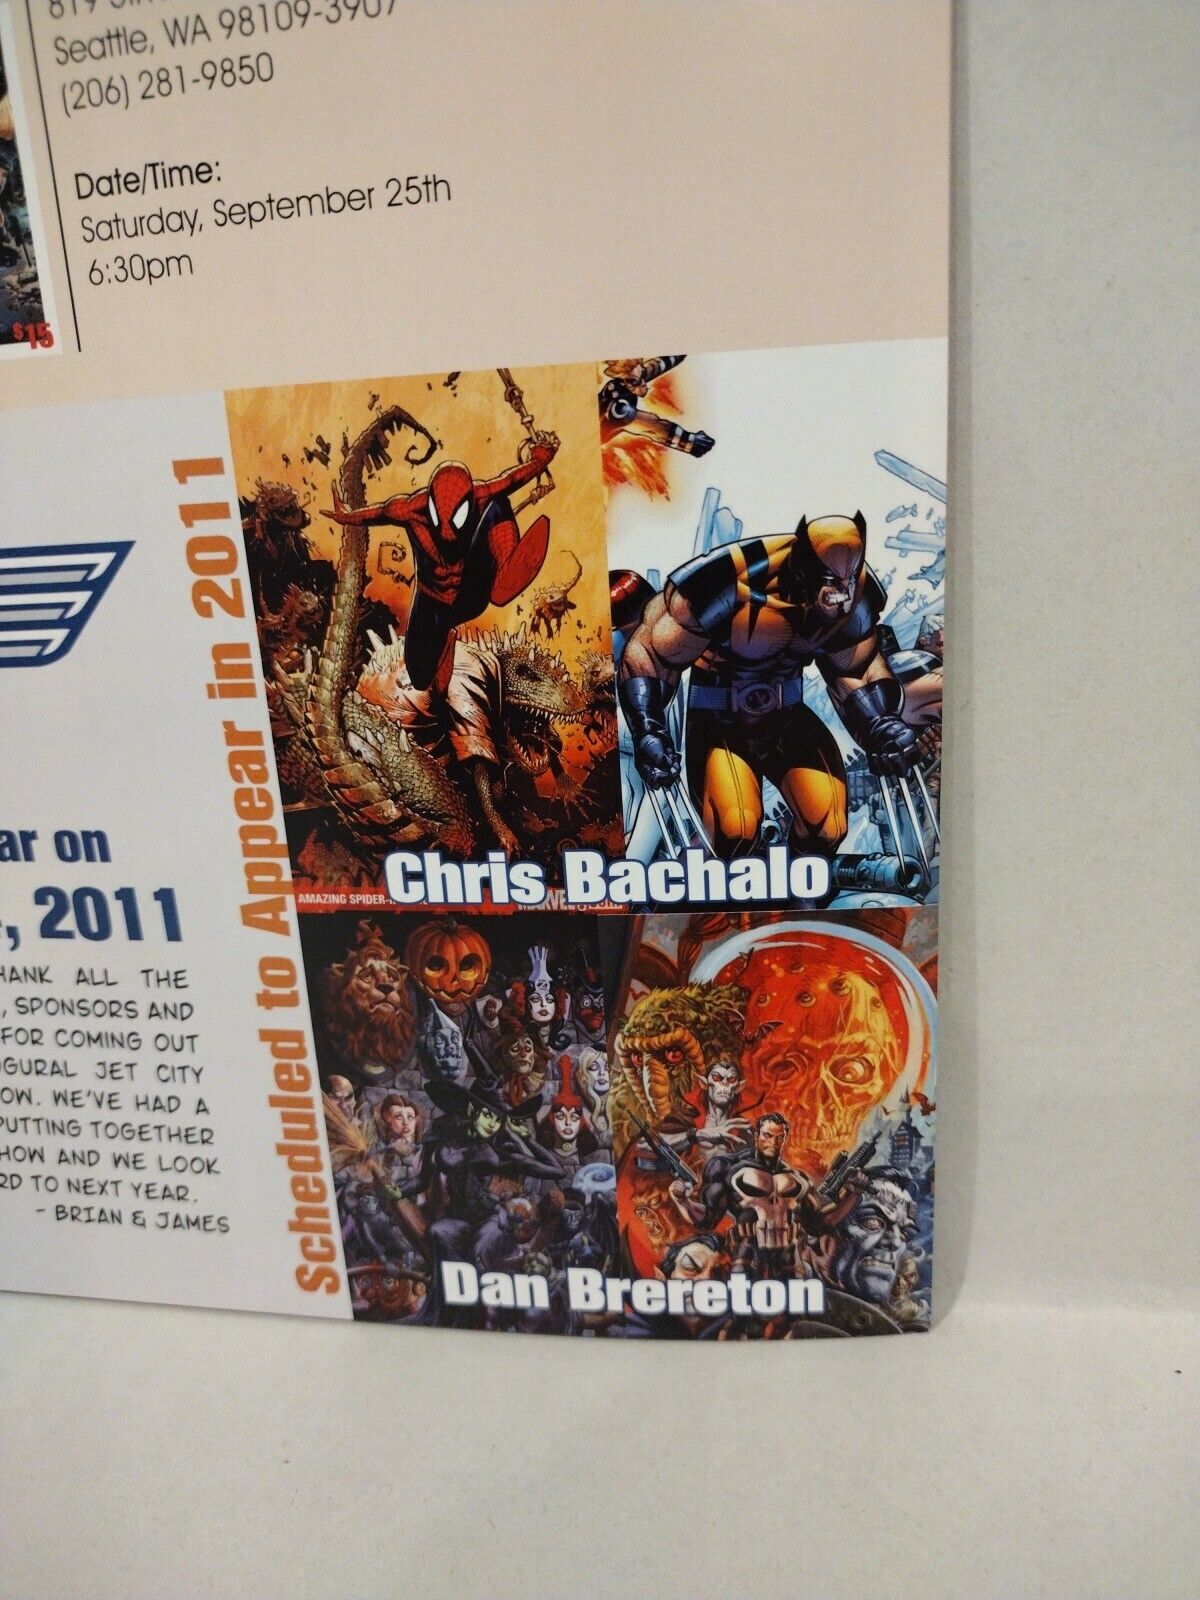 Jet City Comic Show 2010 Program Signed Tim Vigil Dan Panosian Cover Art